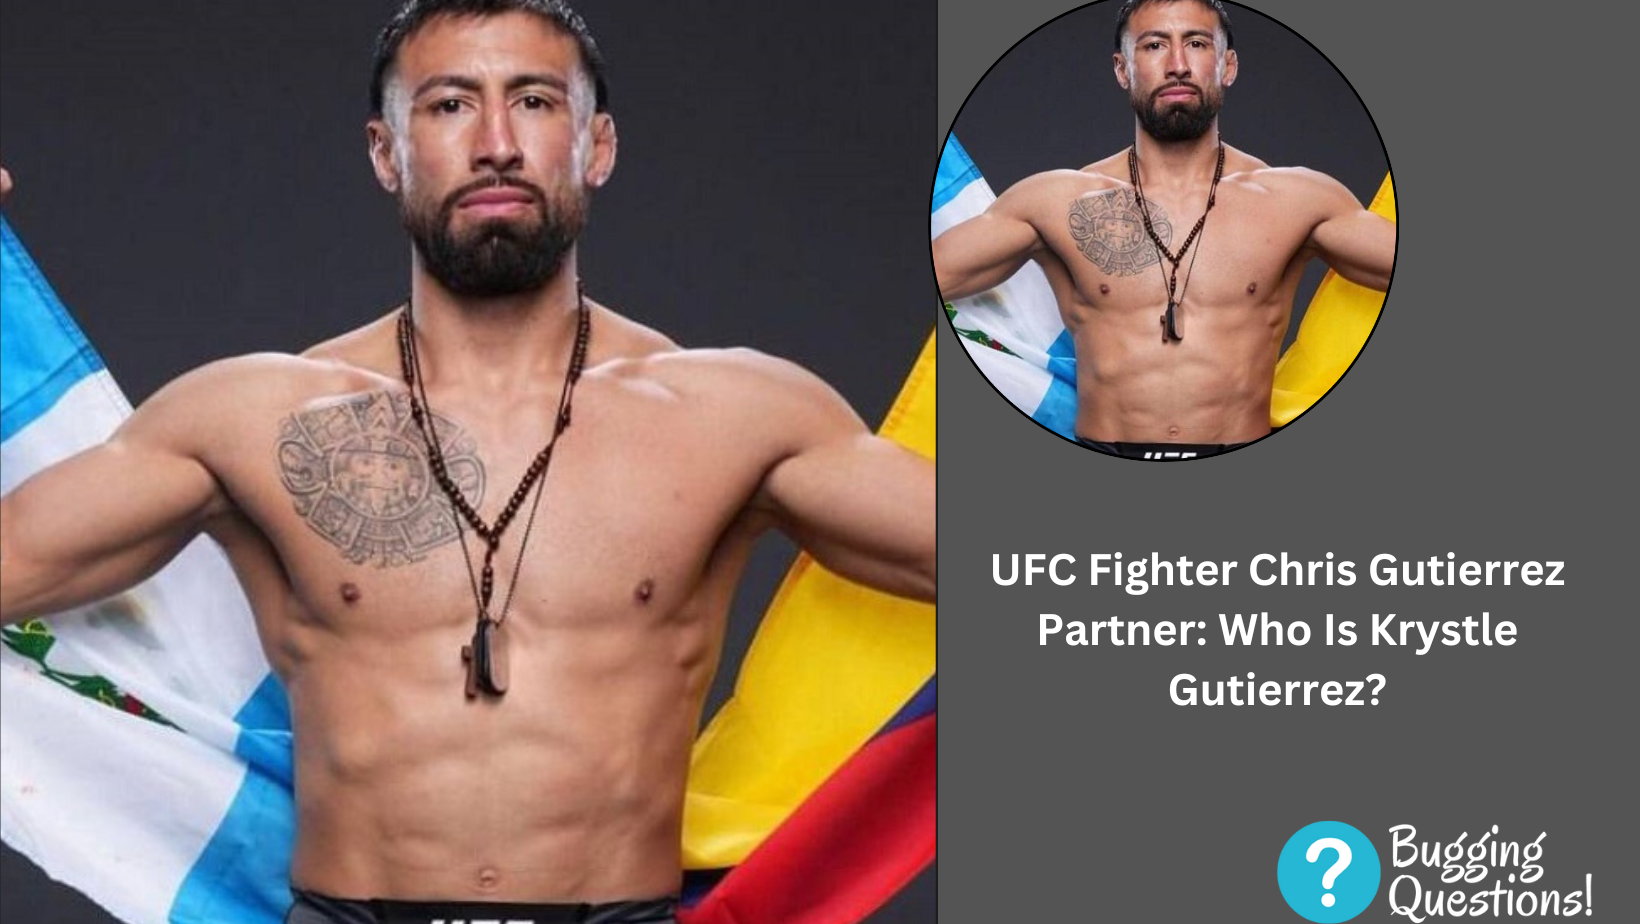 UFC Fighter Chris Gutierrez Partner: Who Is Krystle Gutierrez?